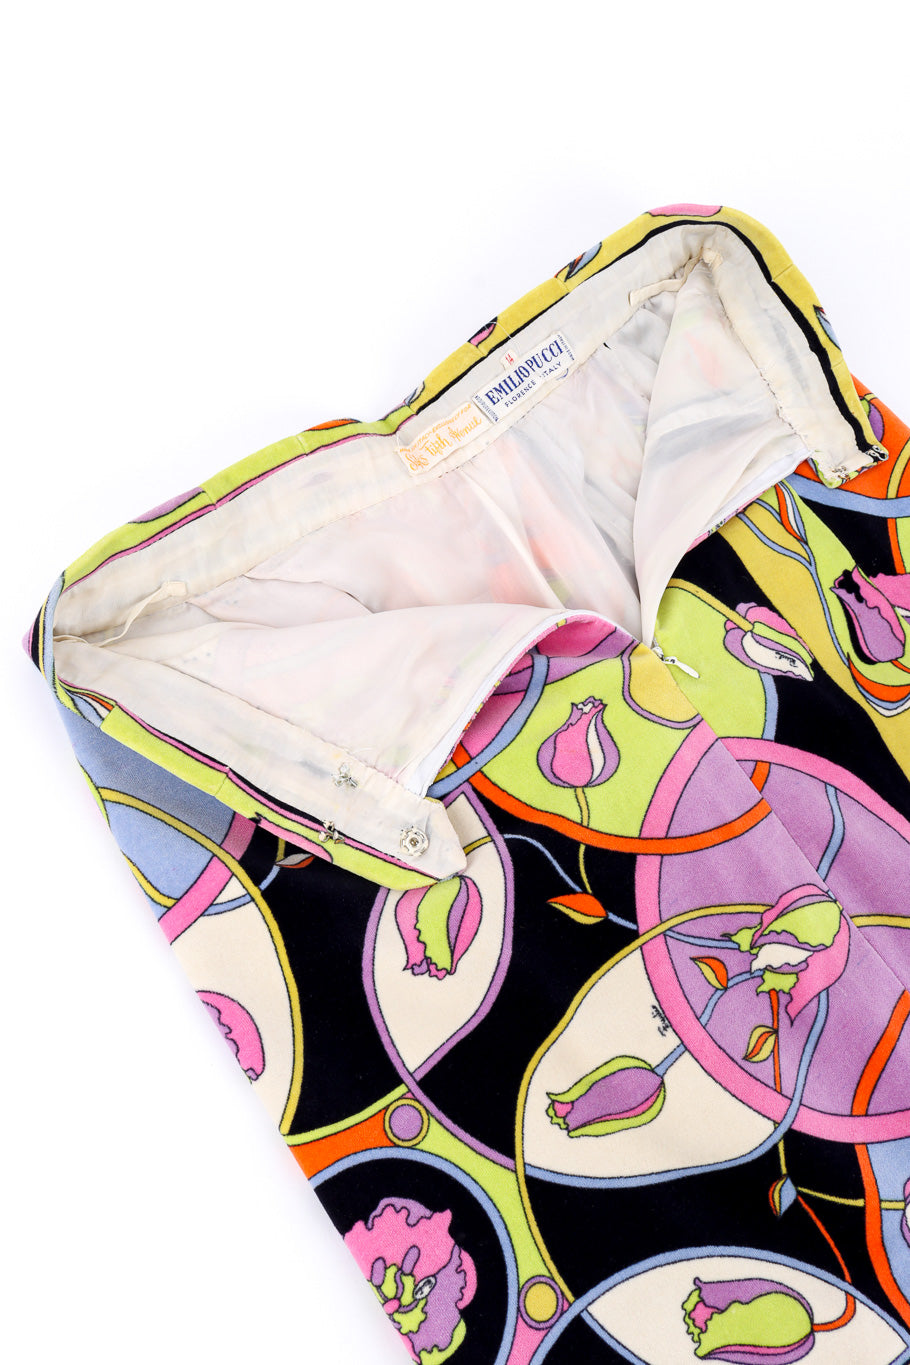 Velvet skirt by Emilio Pucci unzipped lining @recessla